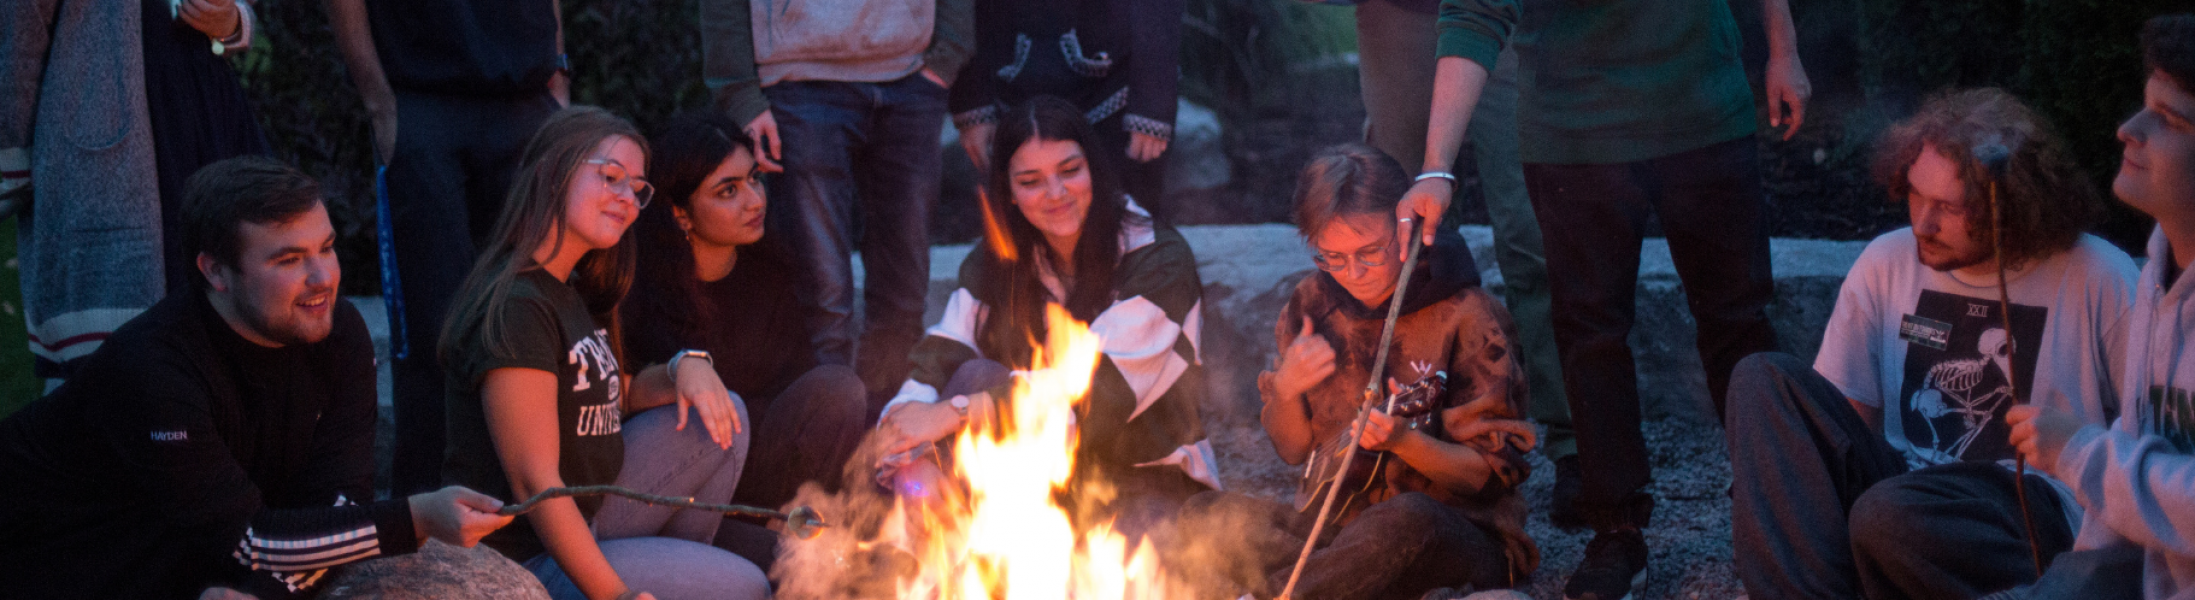 students around bonfire